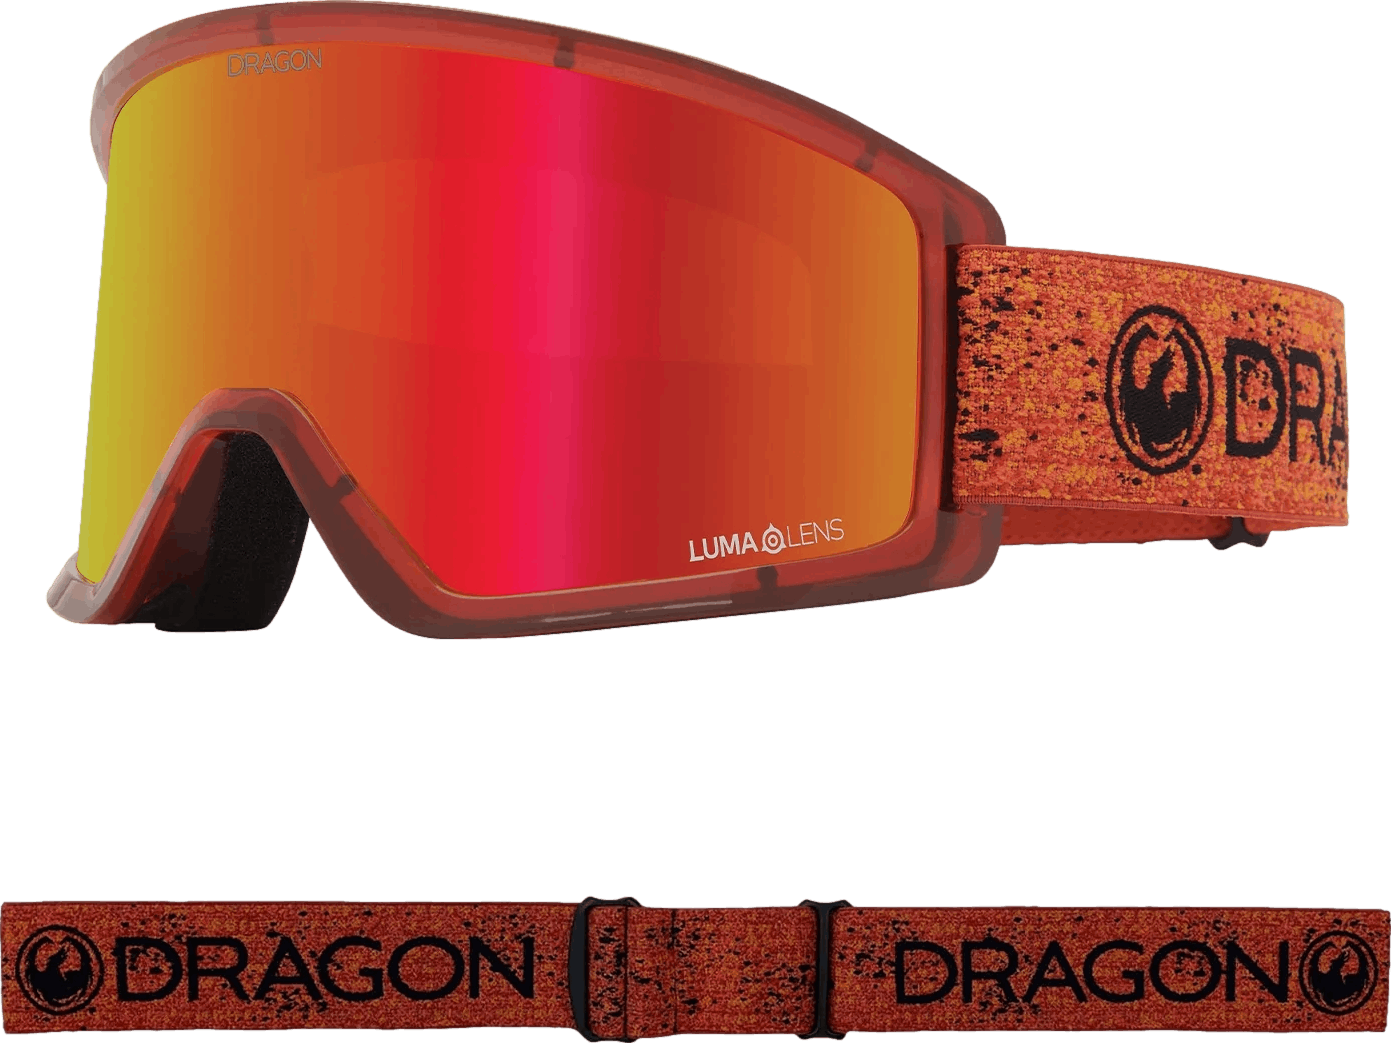 Dragon DX Goggles